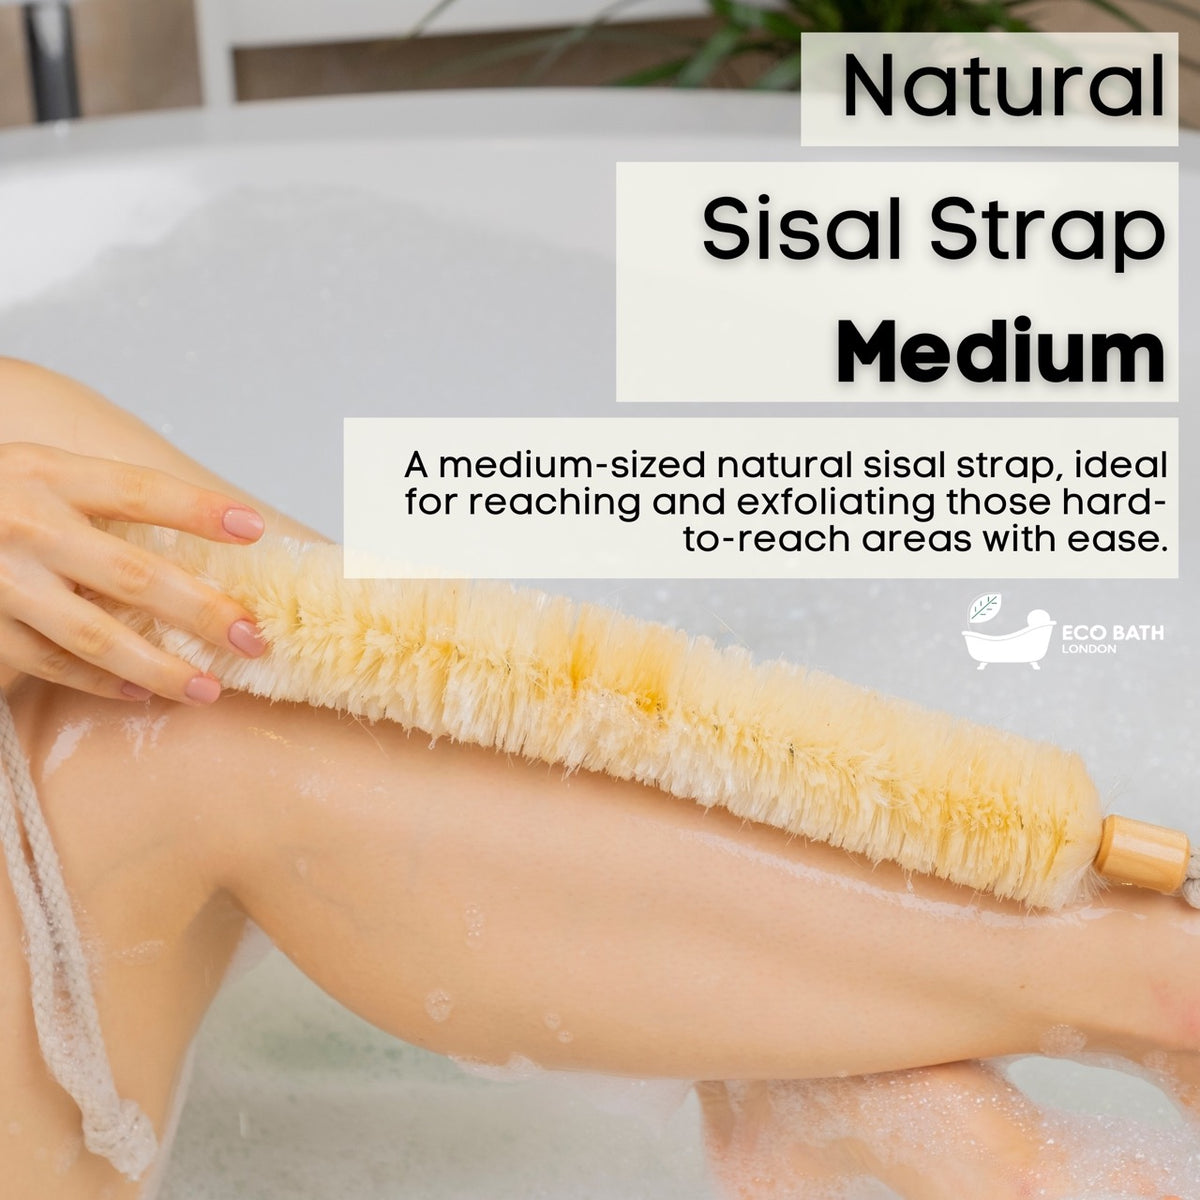 Eco Bath Natural Sisal Strap